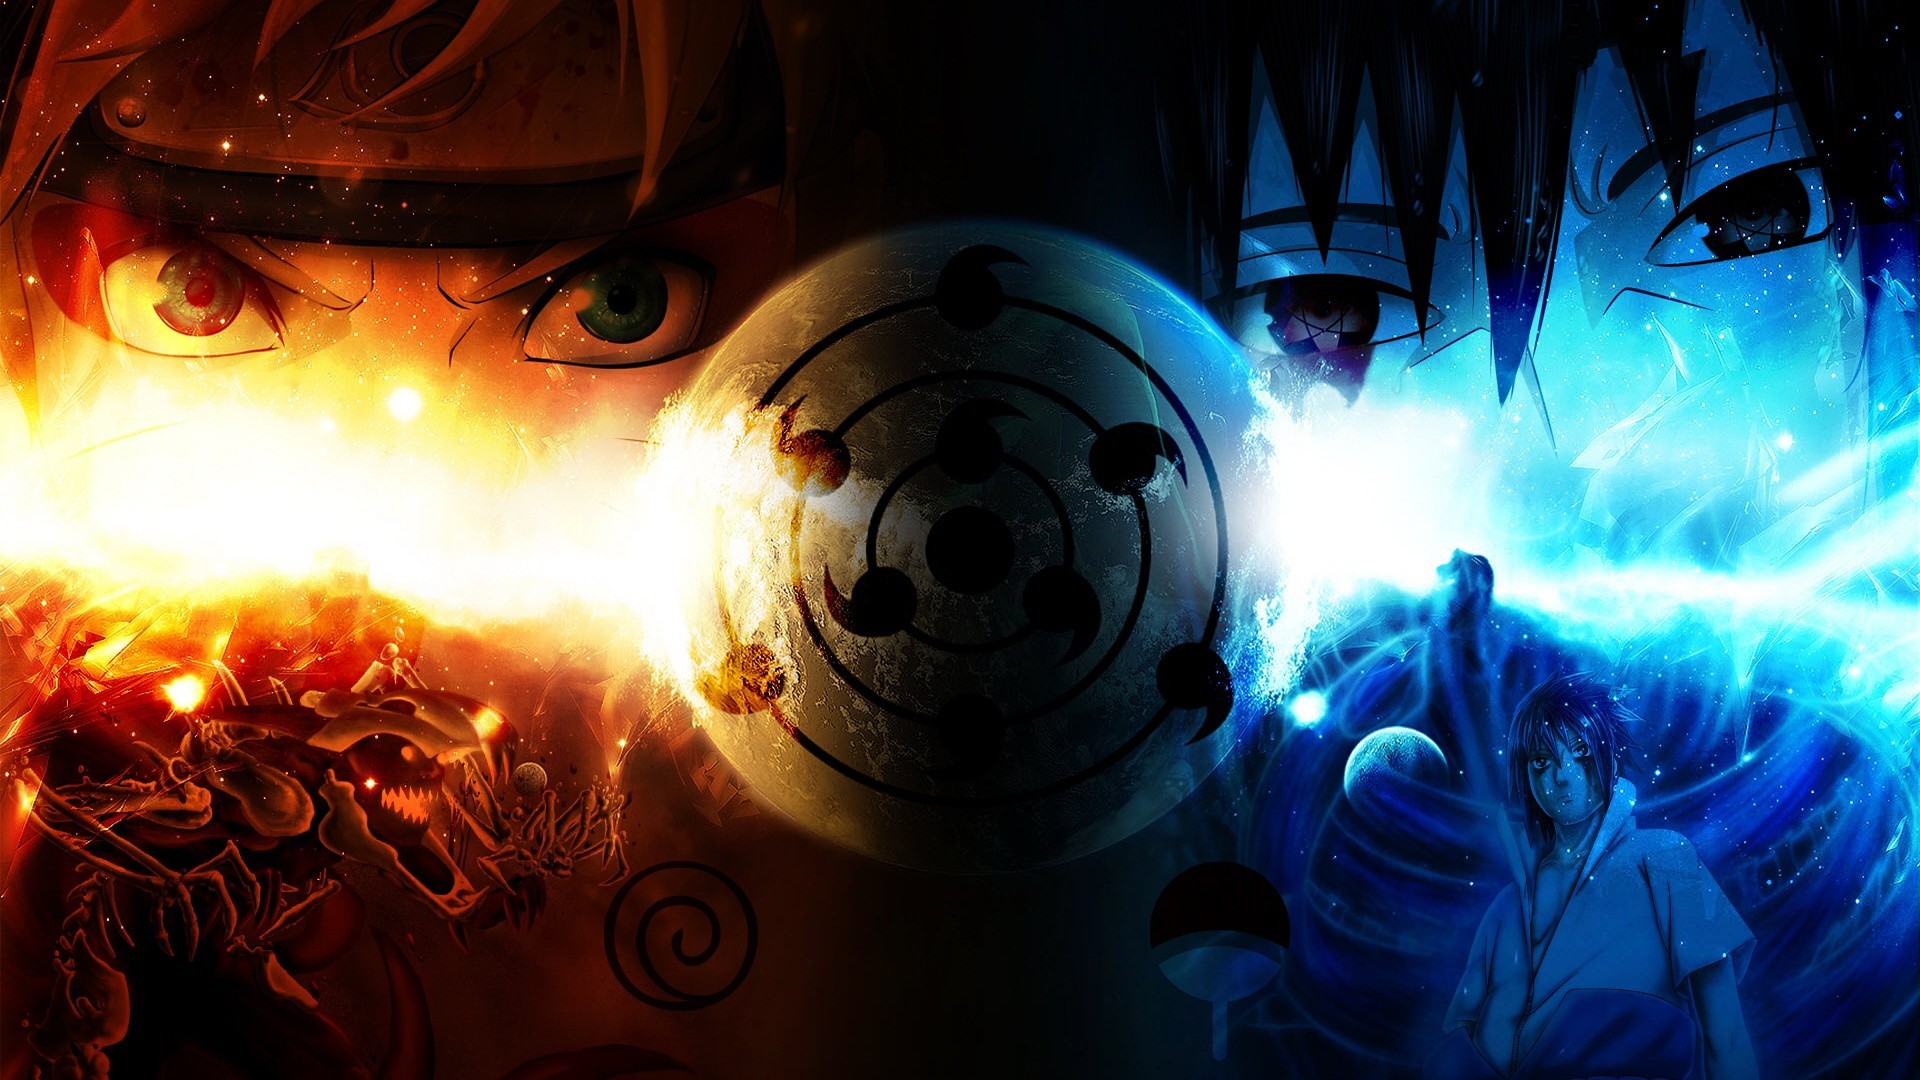 Full HD 1080p Naruto Wallpapers HD, Desktop Backgrounds 1920x1080  Naruto  anime, Fondos de pantallas cool de anime, Dibujos de kakashi